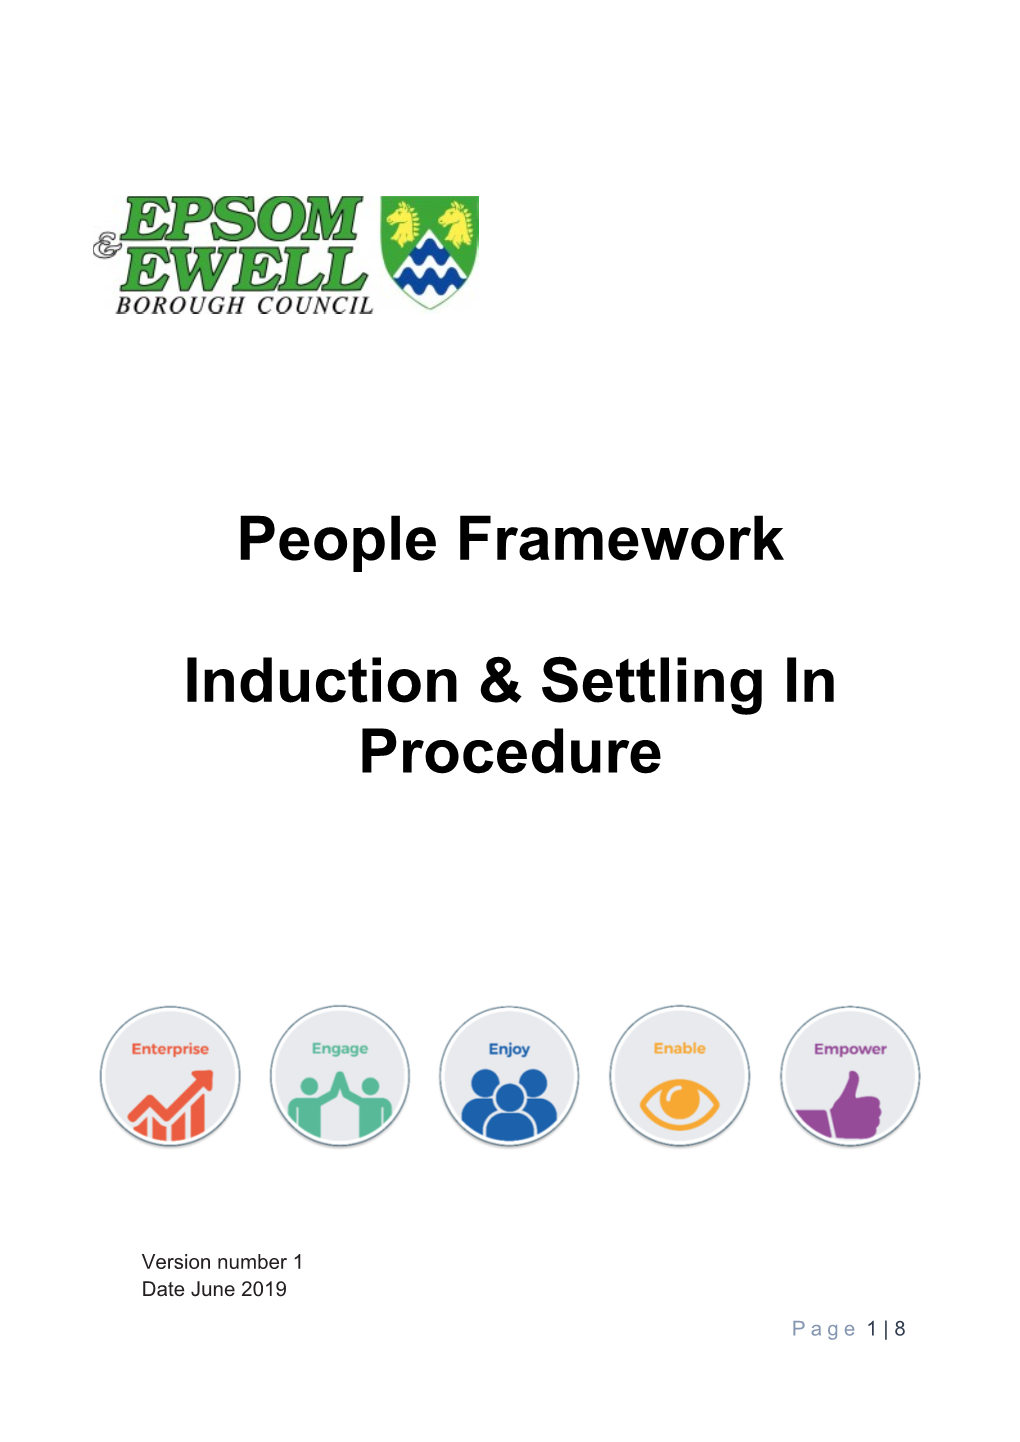 People Framework Induction & Settling in Procedure